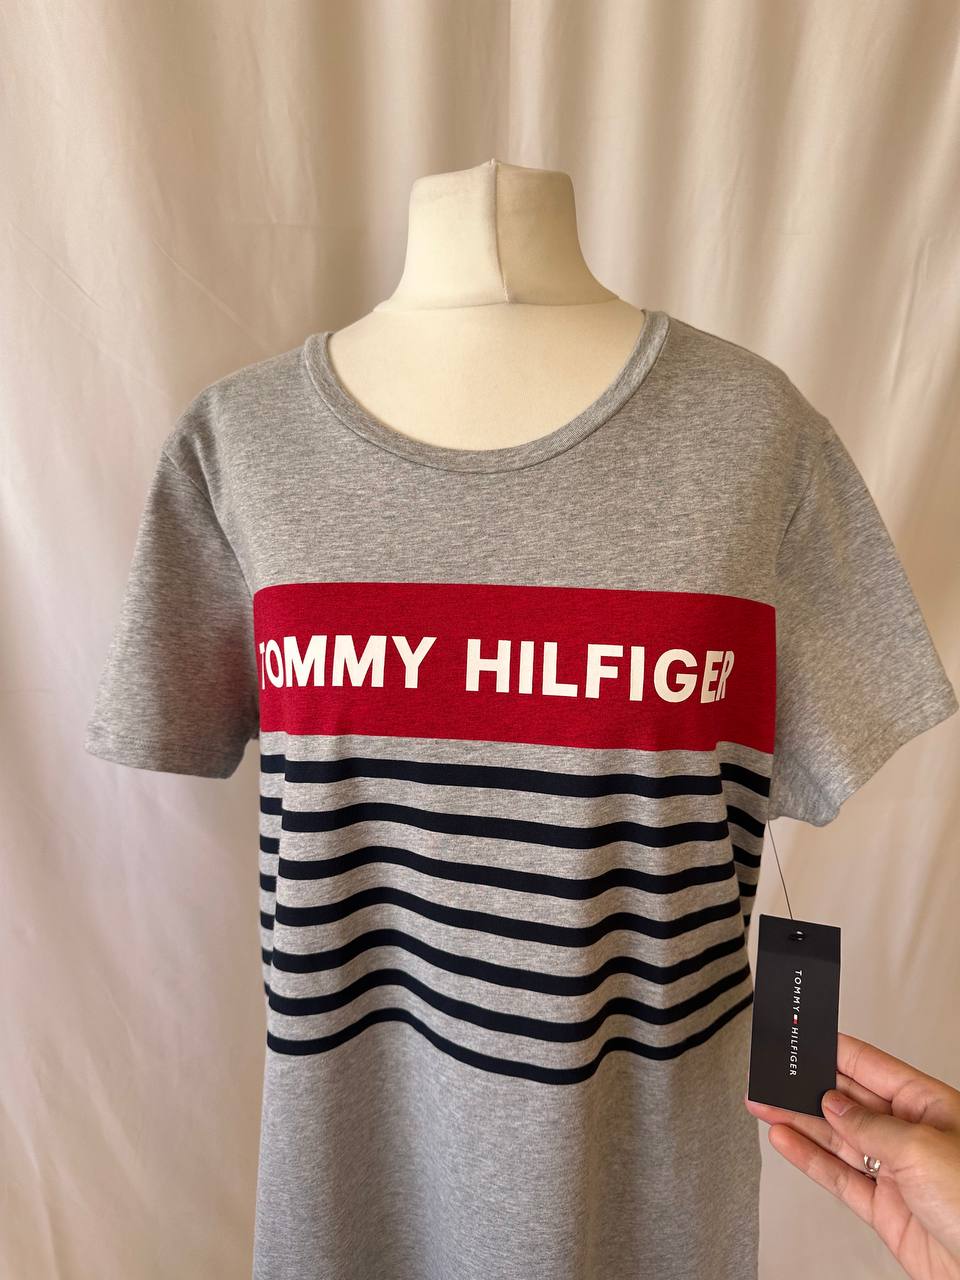 Tommy Hilfiger dress shirt